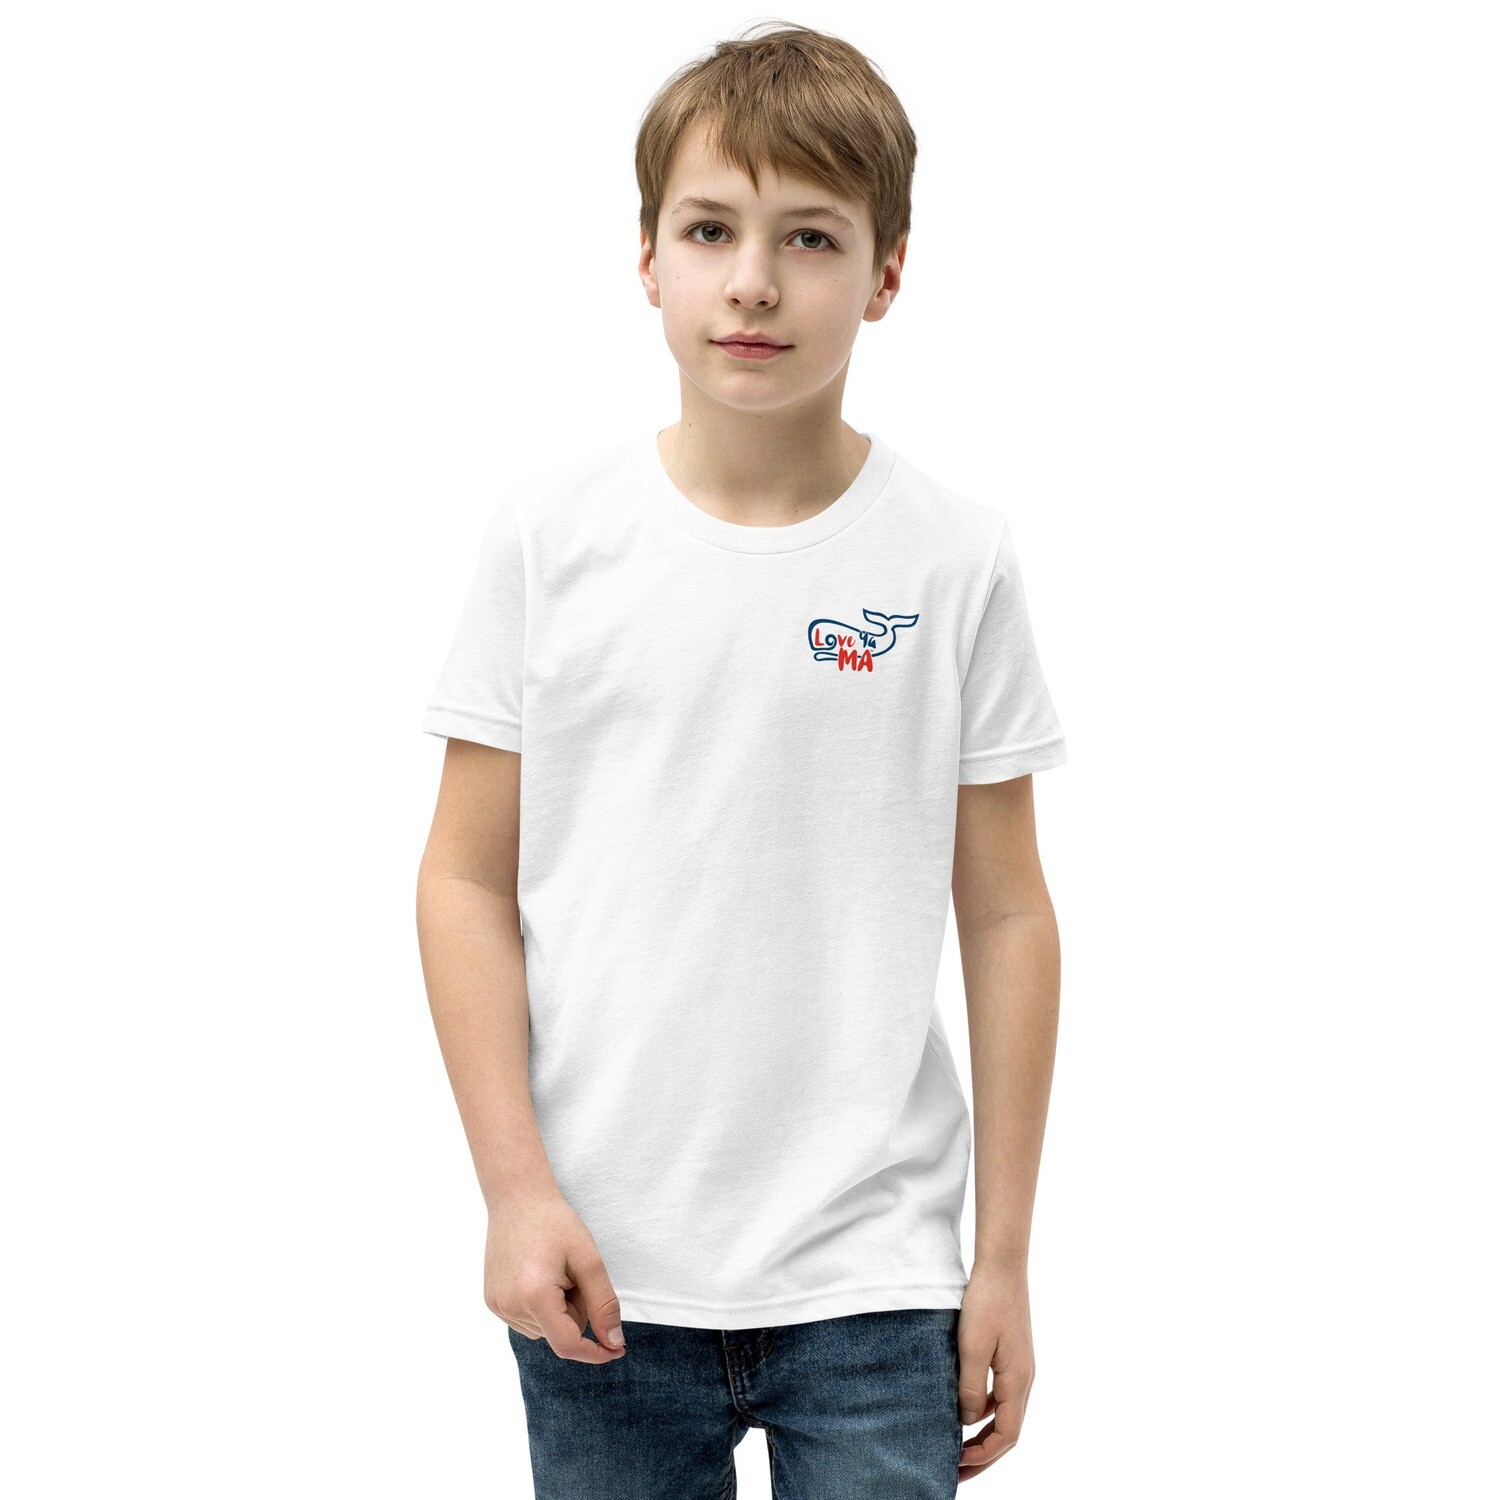 LYM Youth Short Sleeve T-Shirt